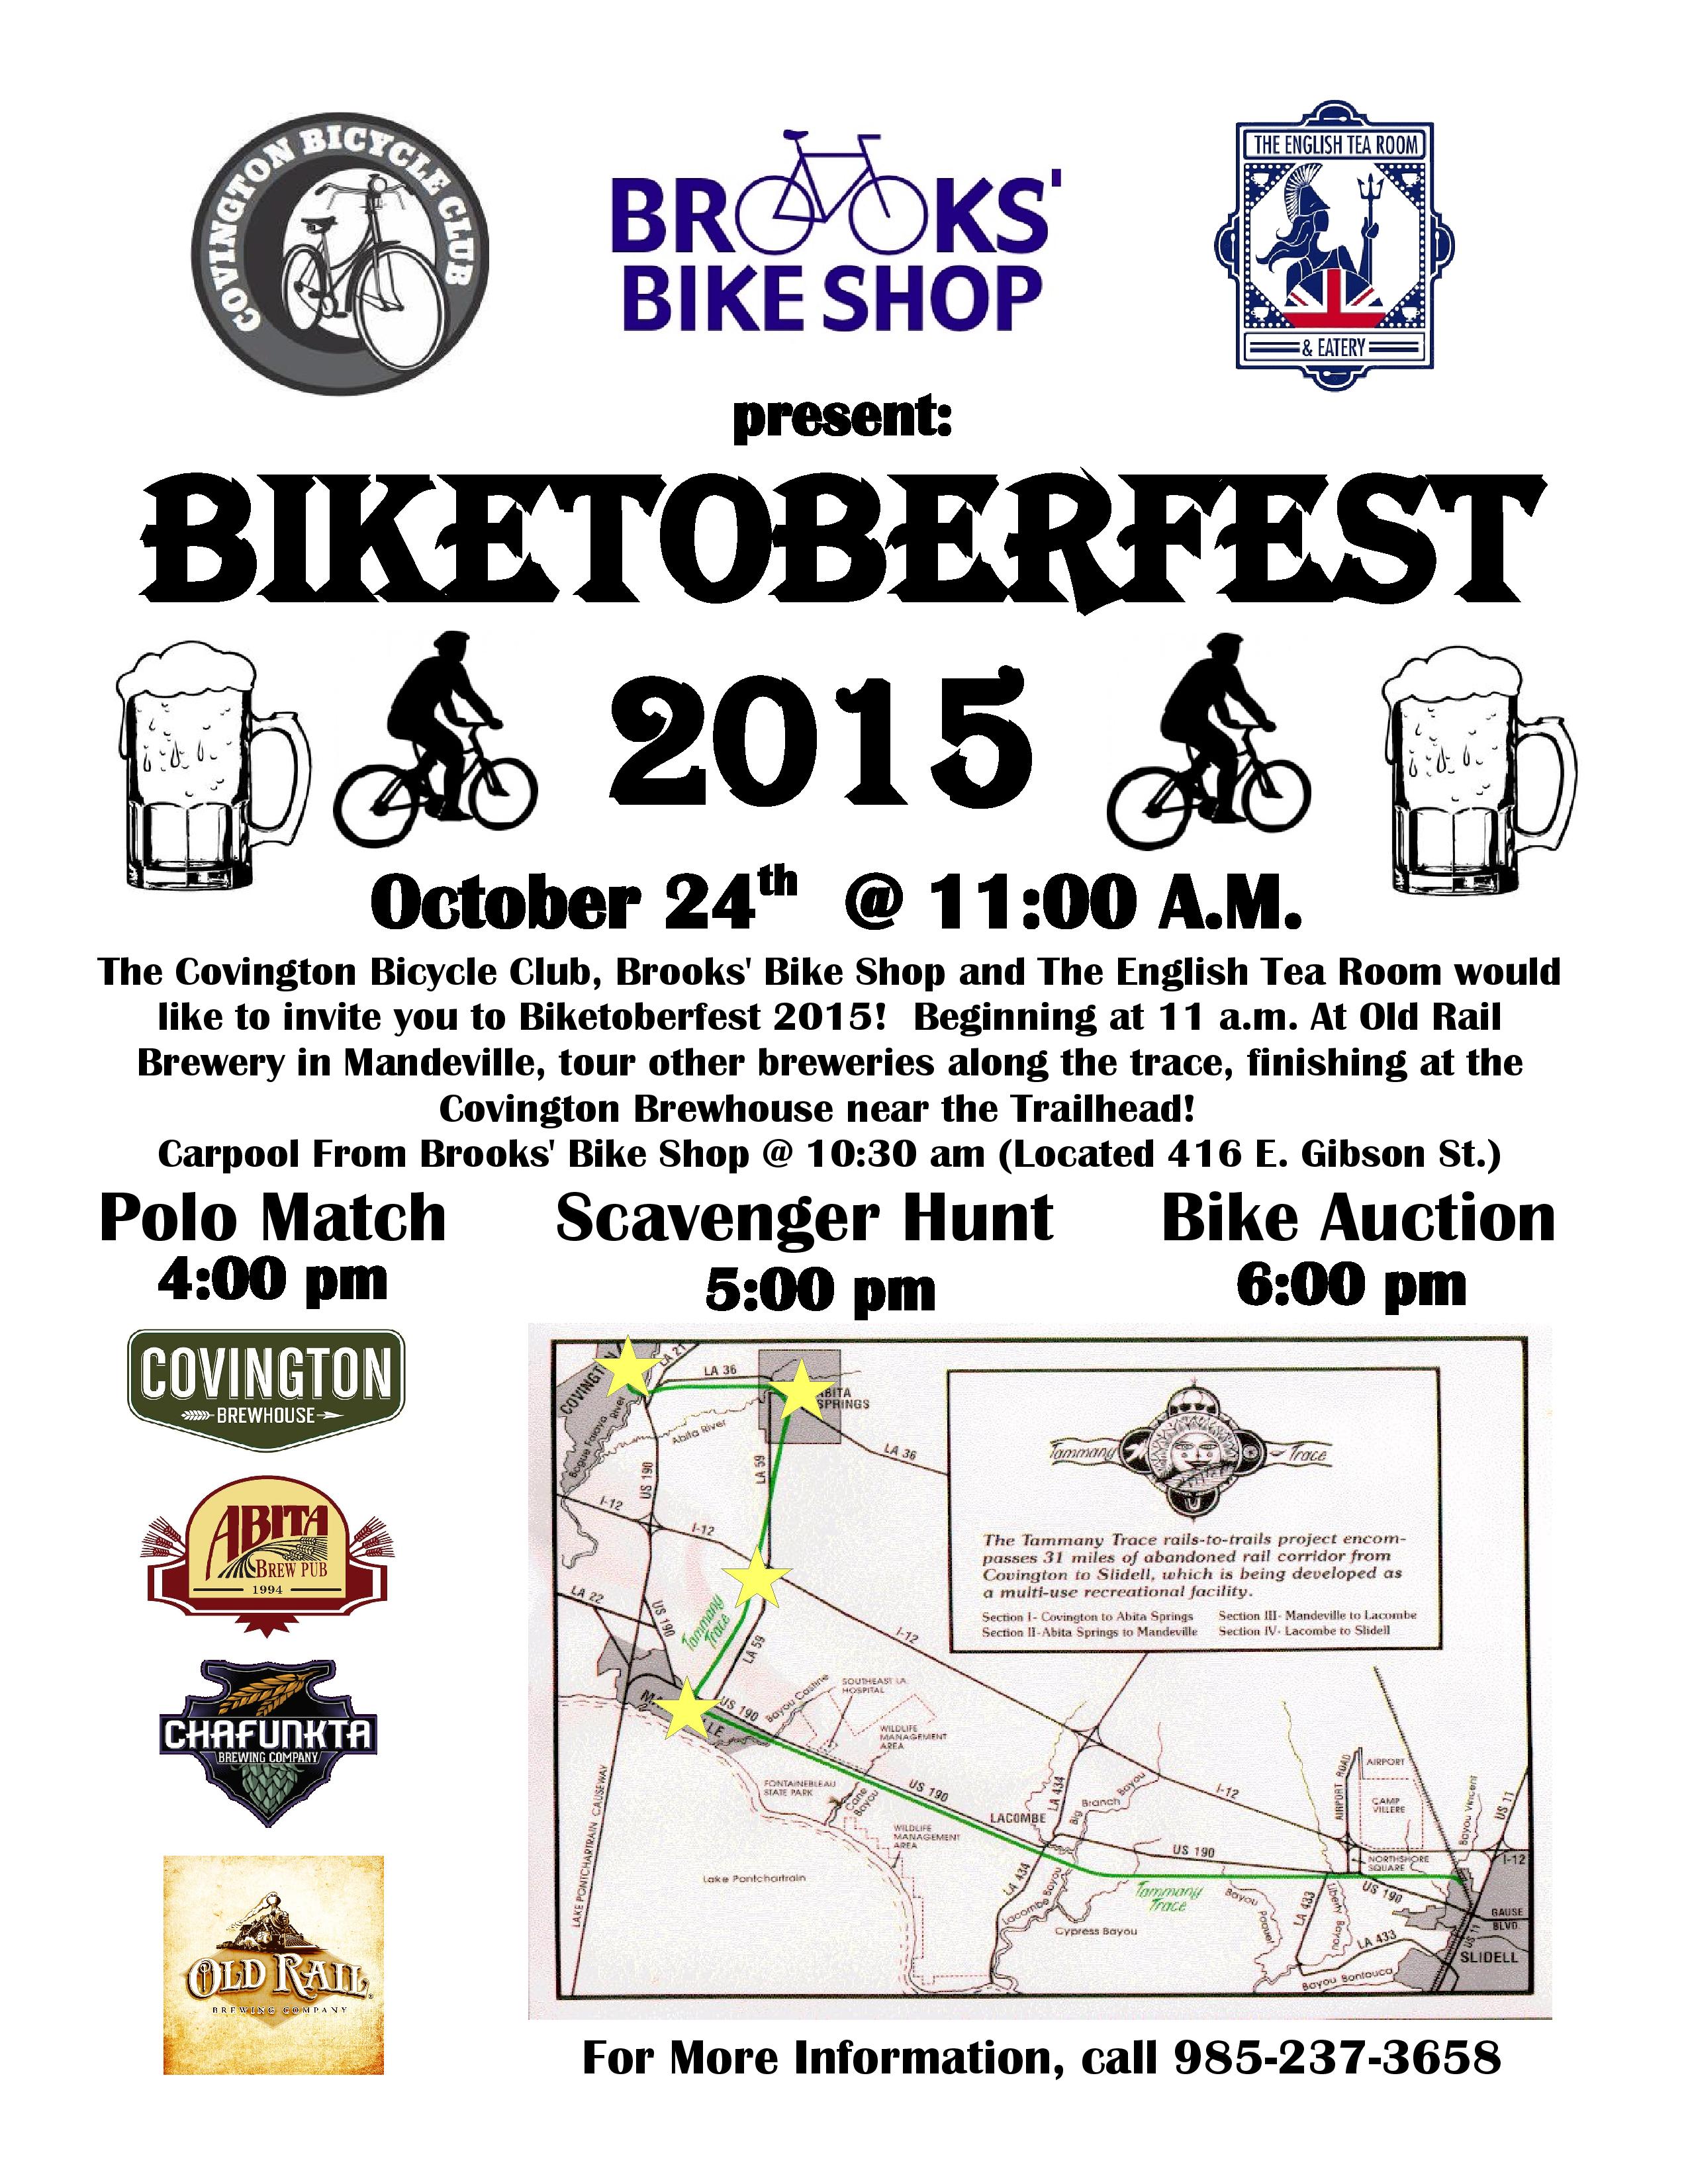 Save the Date For Biketoberfest 2015!